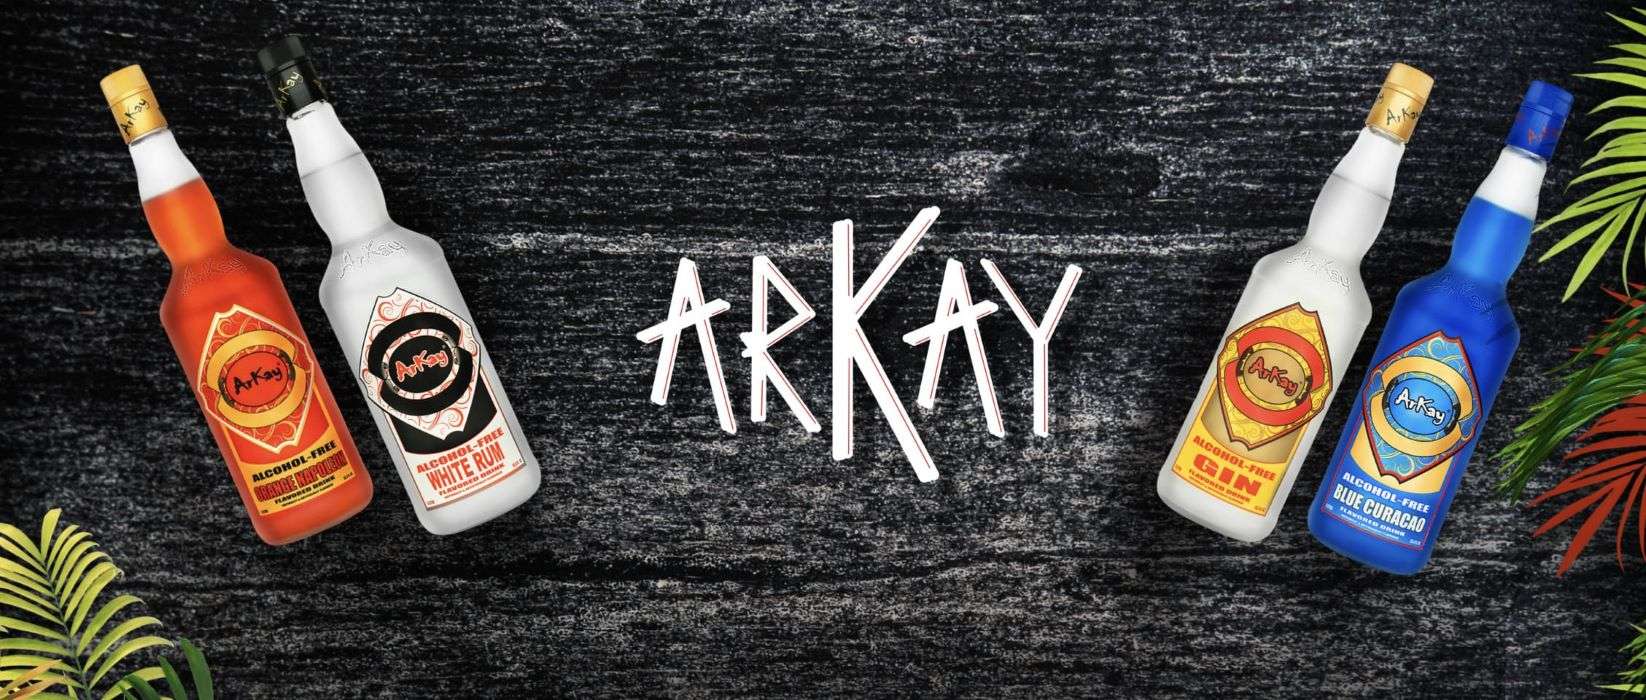 Arkay logo for four non-alcoholic drink bottles.